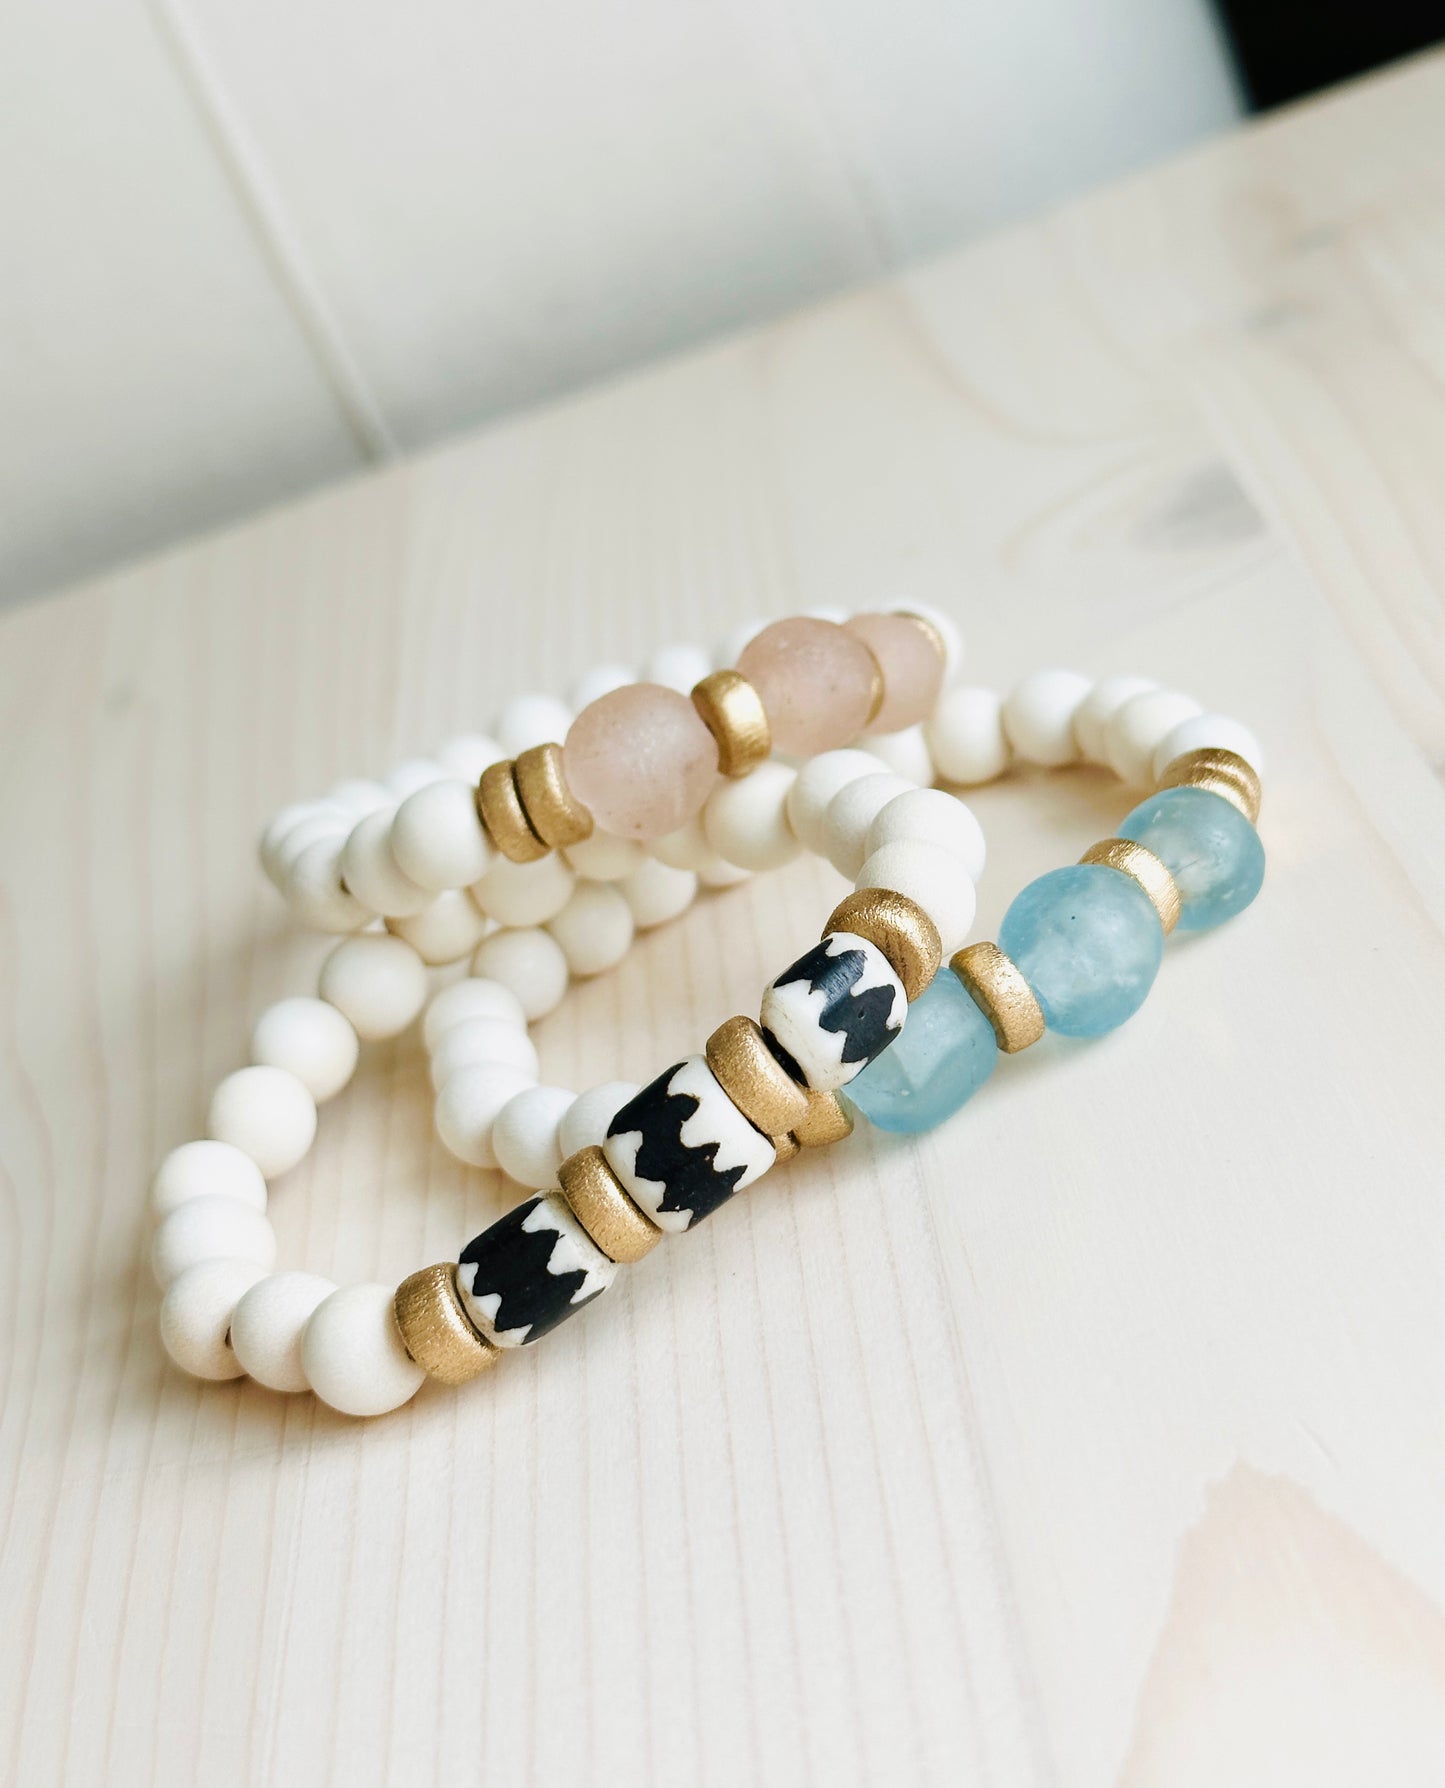 Blush, Ocean, and Zebra Batik Island Bracelets on table Handmade in the USA